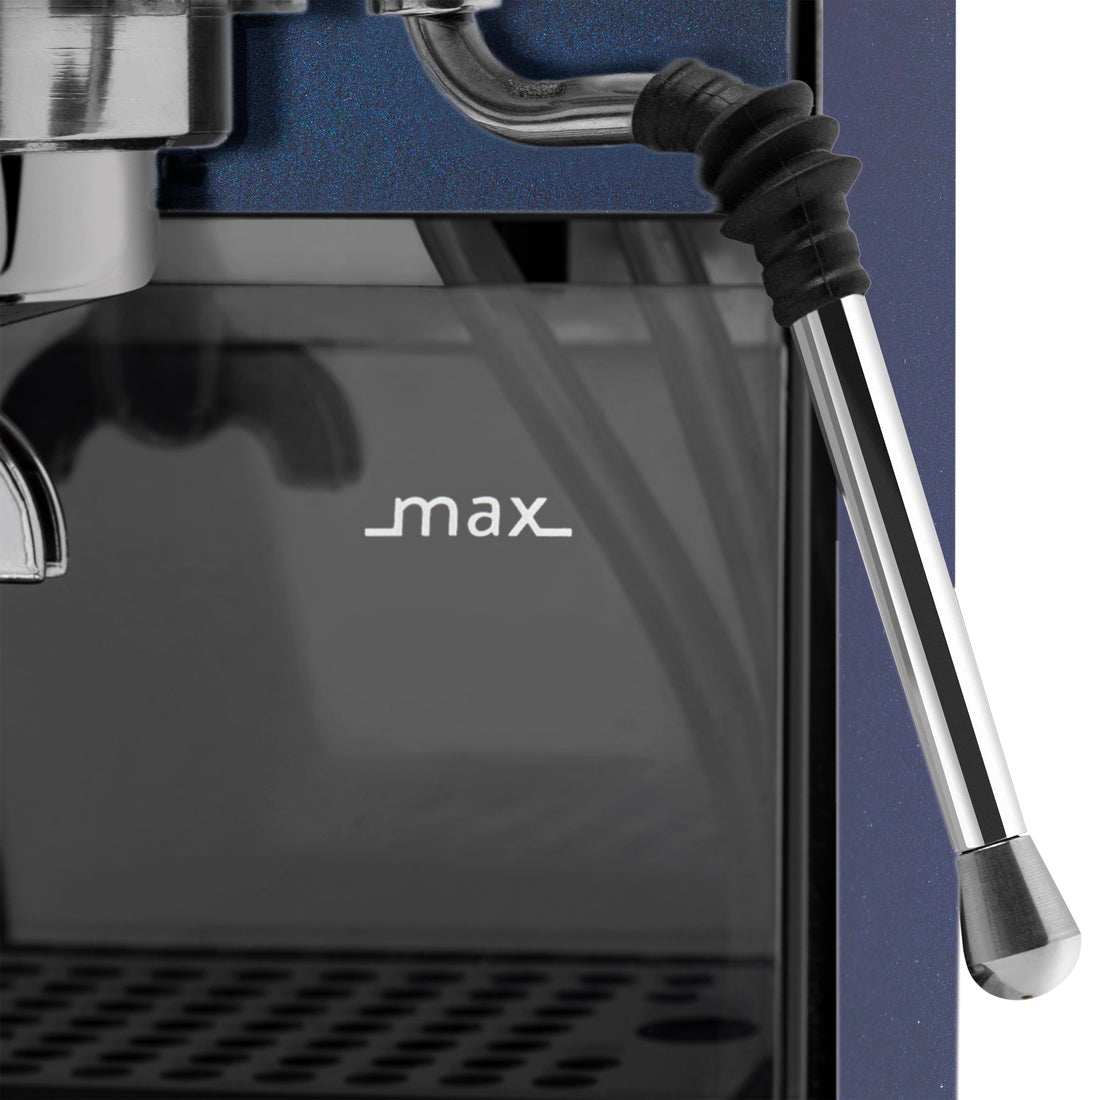 Gaggia Classic Evo Pro Espresso Machine in Classic Blue with Olive Wood